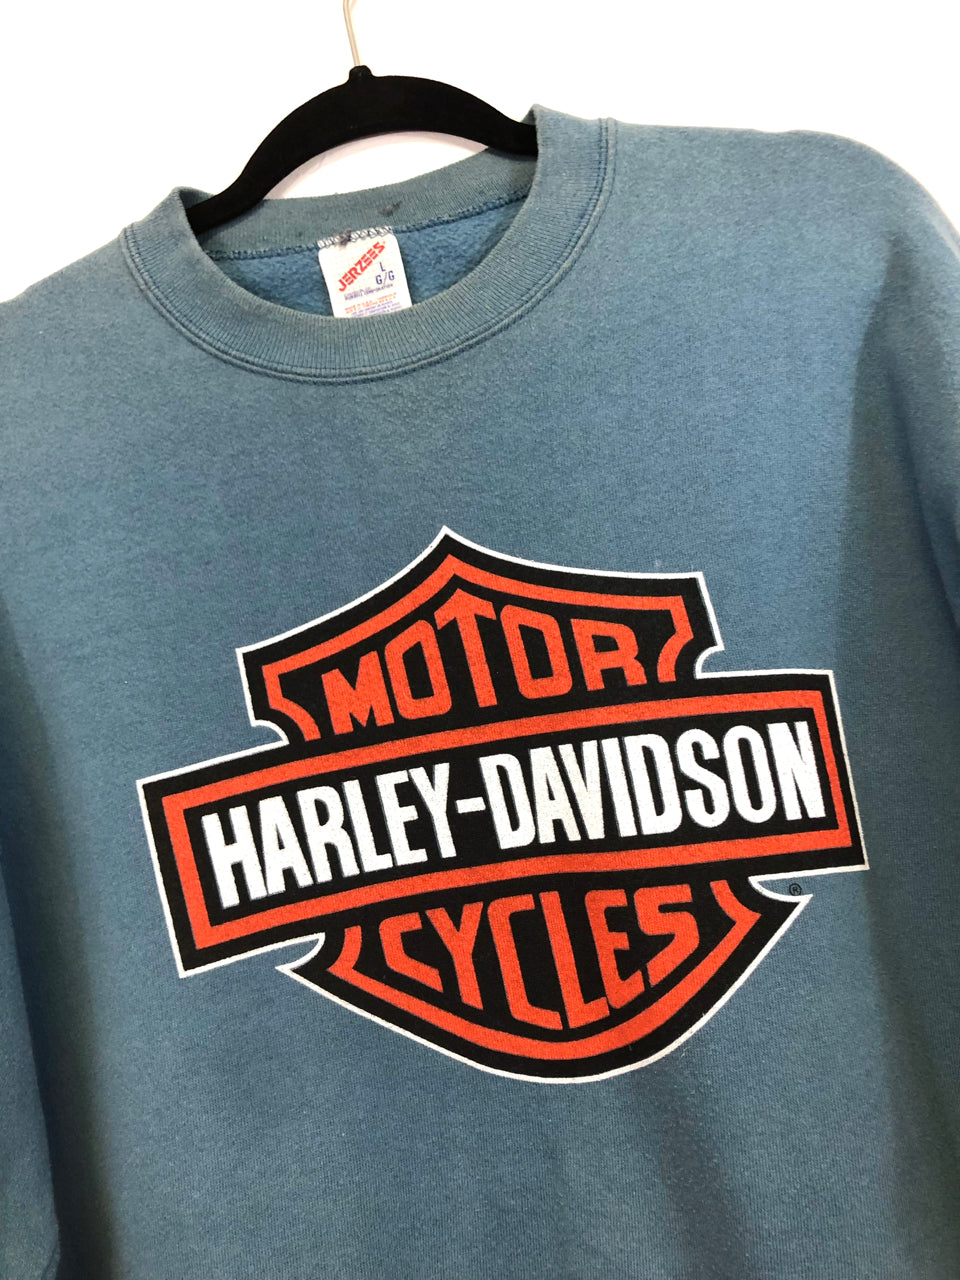 Harley Davidson Blue Sweatshirt